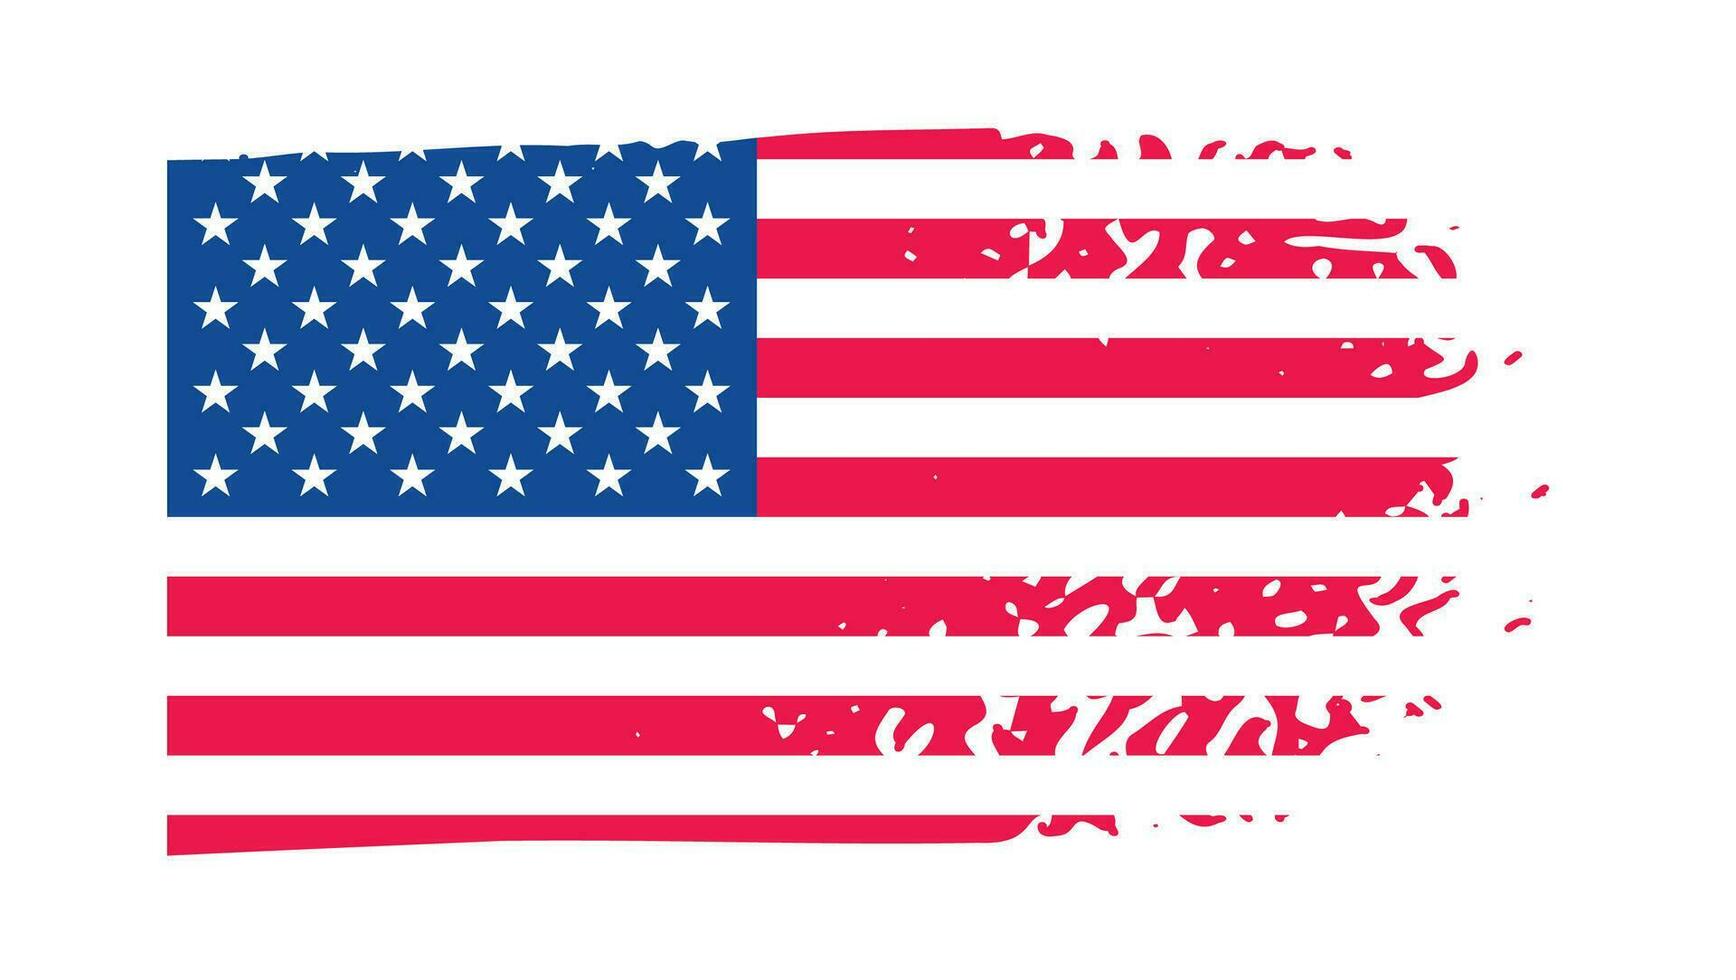 grunge nosotros bandera cepillo carrera efecto. Estados Unidos bandera cepillo pintar utilizar a 4 4 de julio americano presidente día. unido estados de America bandera con acuarela pintar cepillo golpes textura o grunge textura diseño. vector